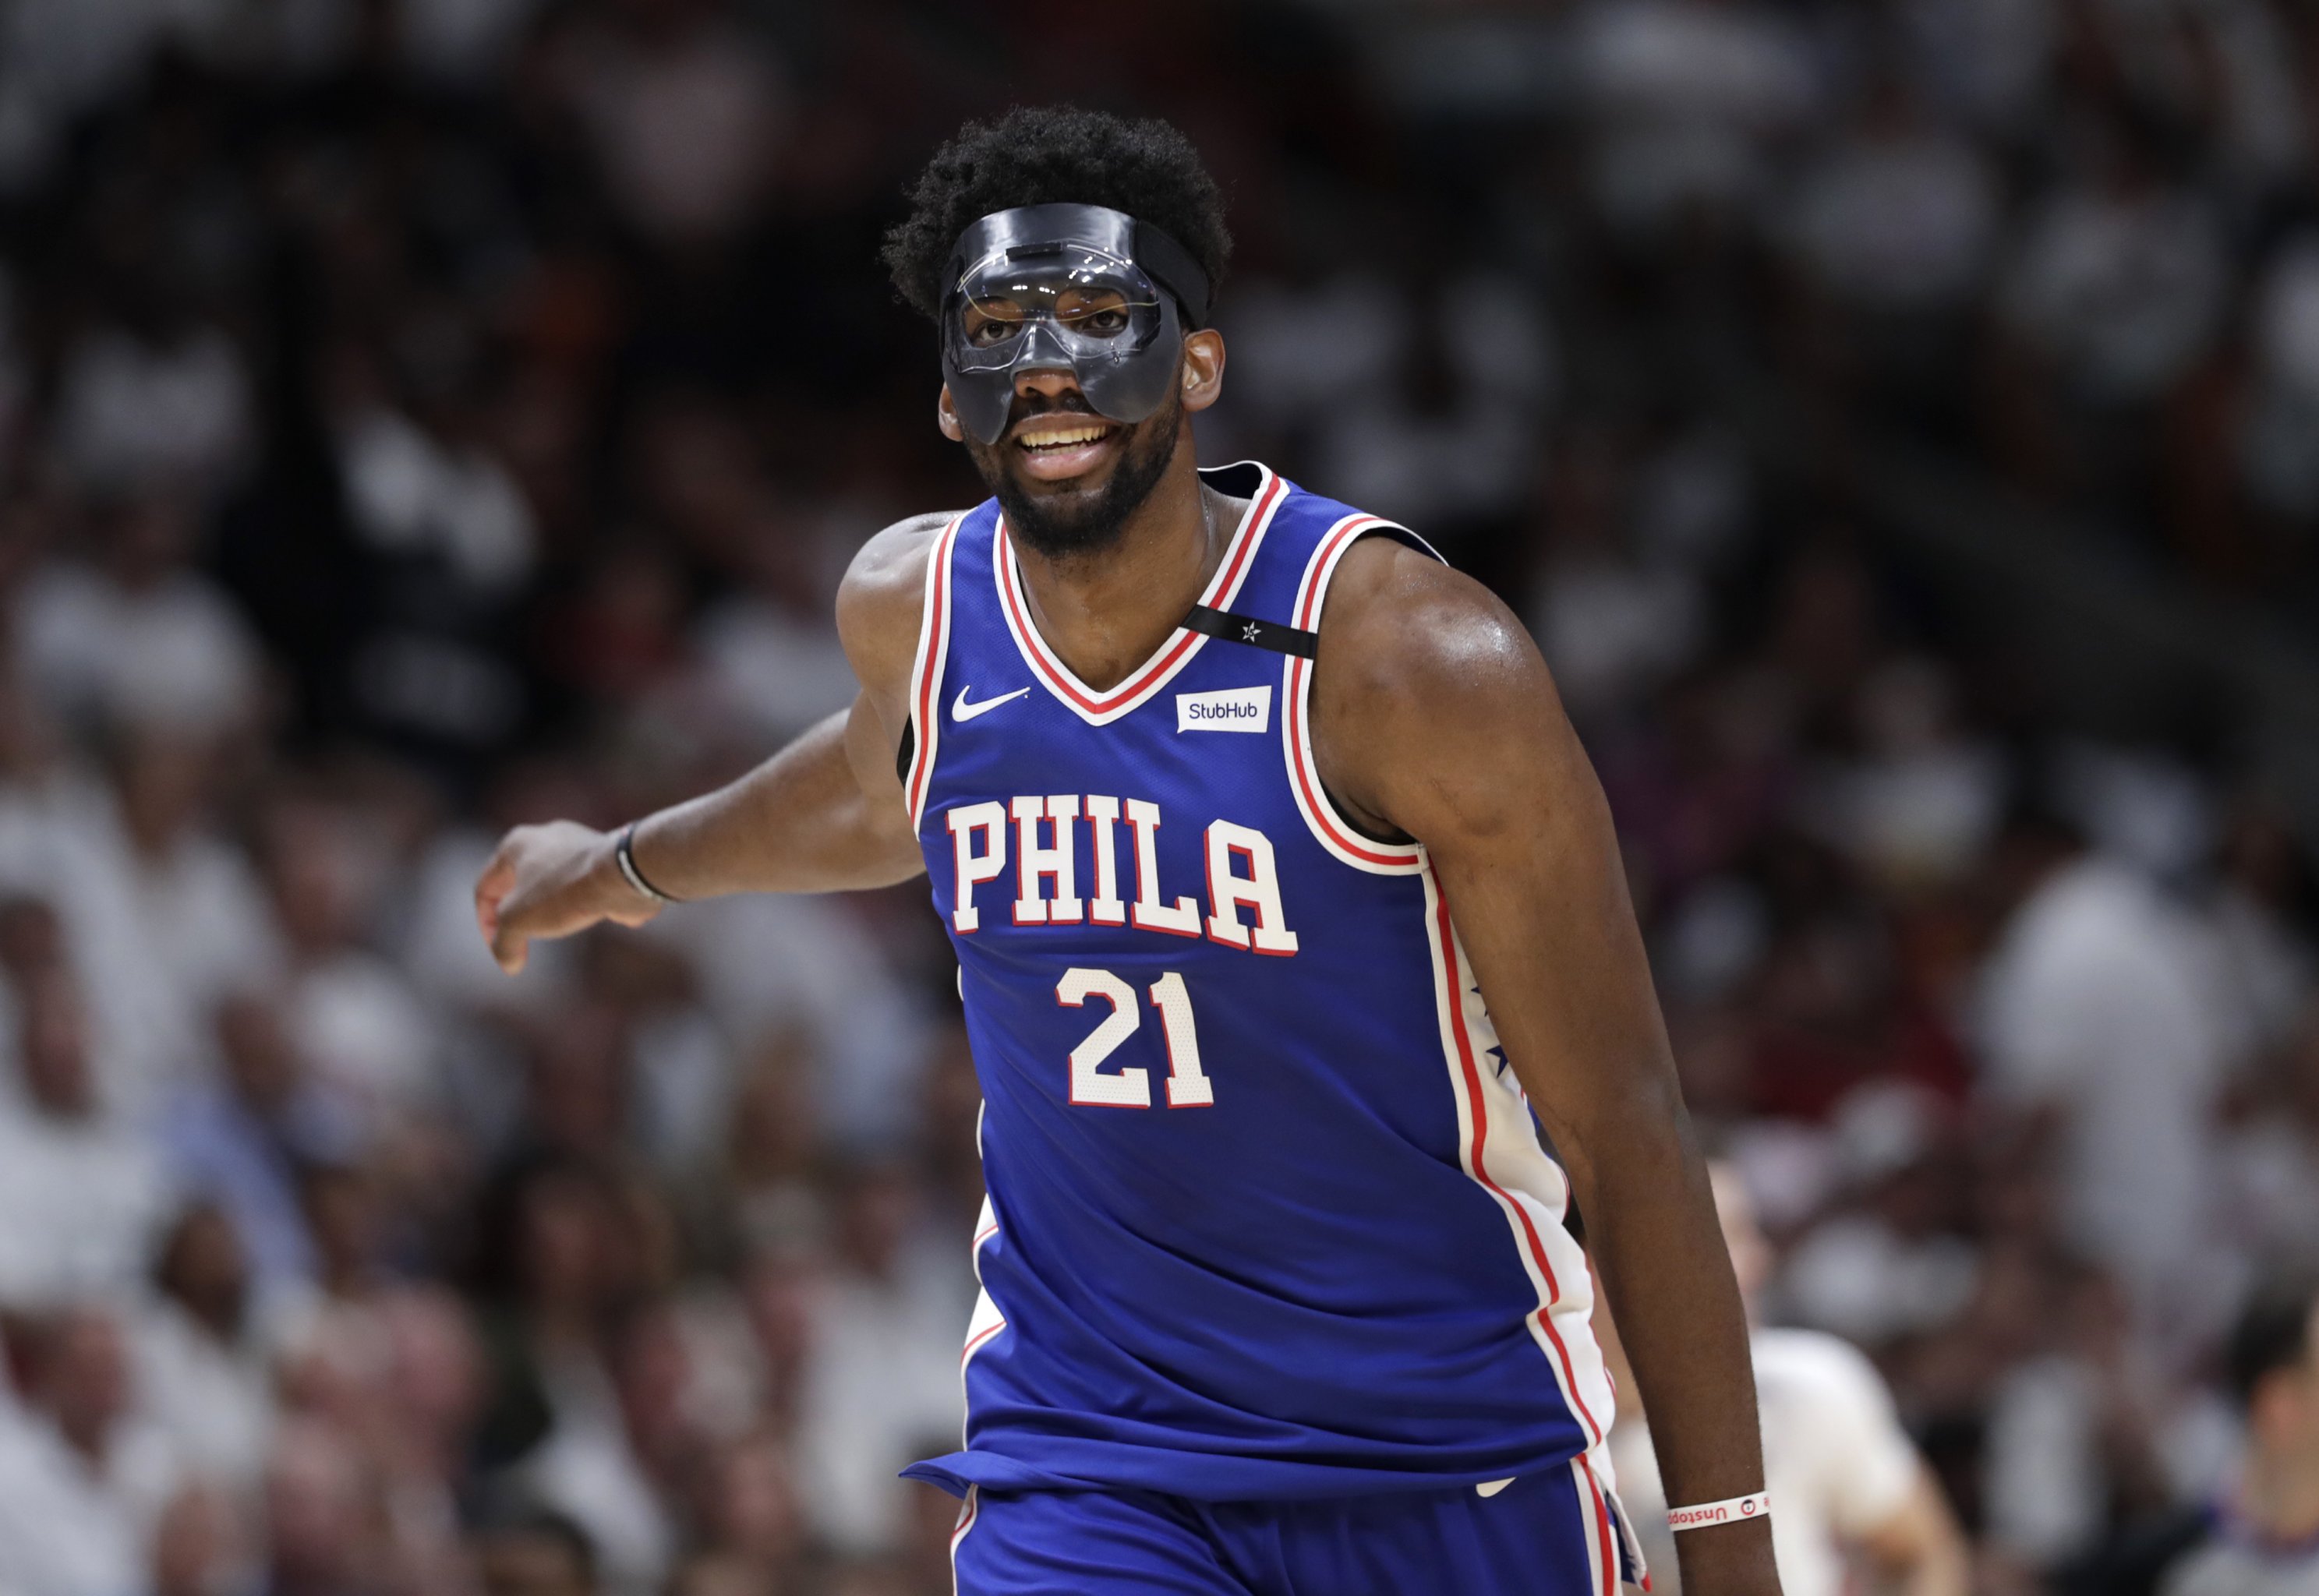 NBA Players Wearing Protective Masks